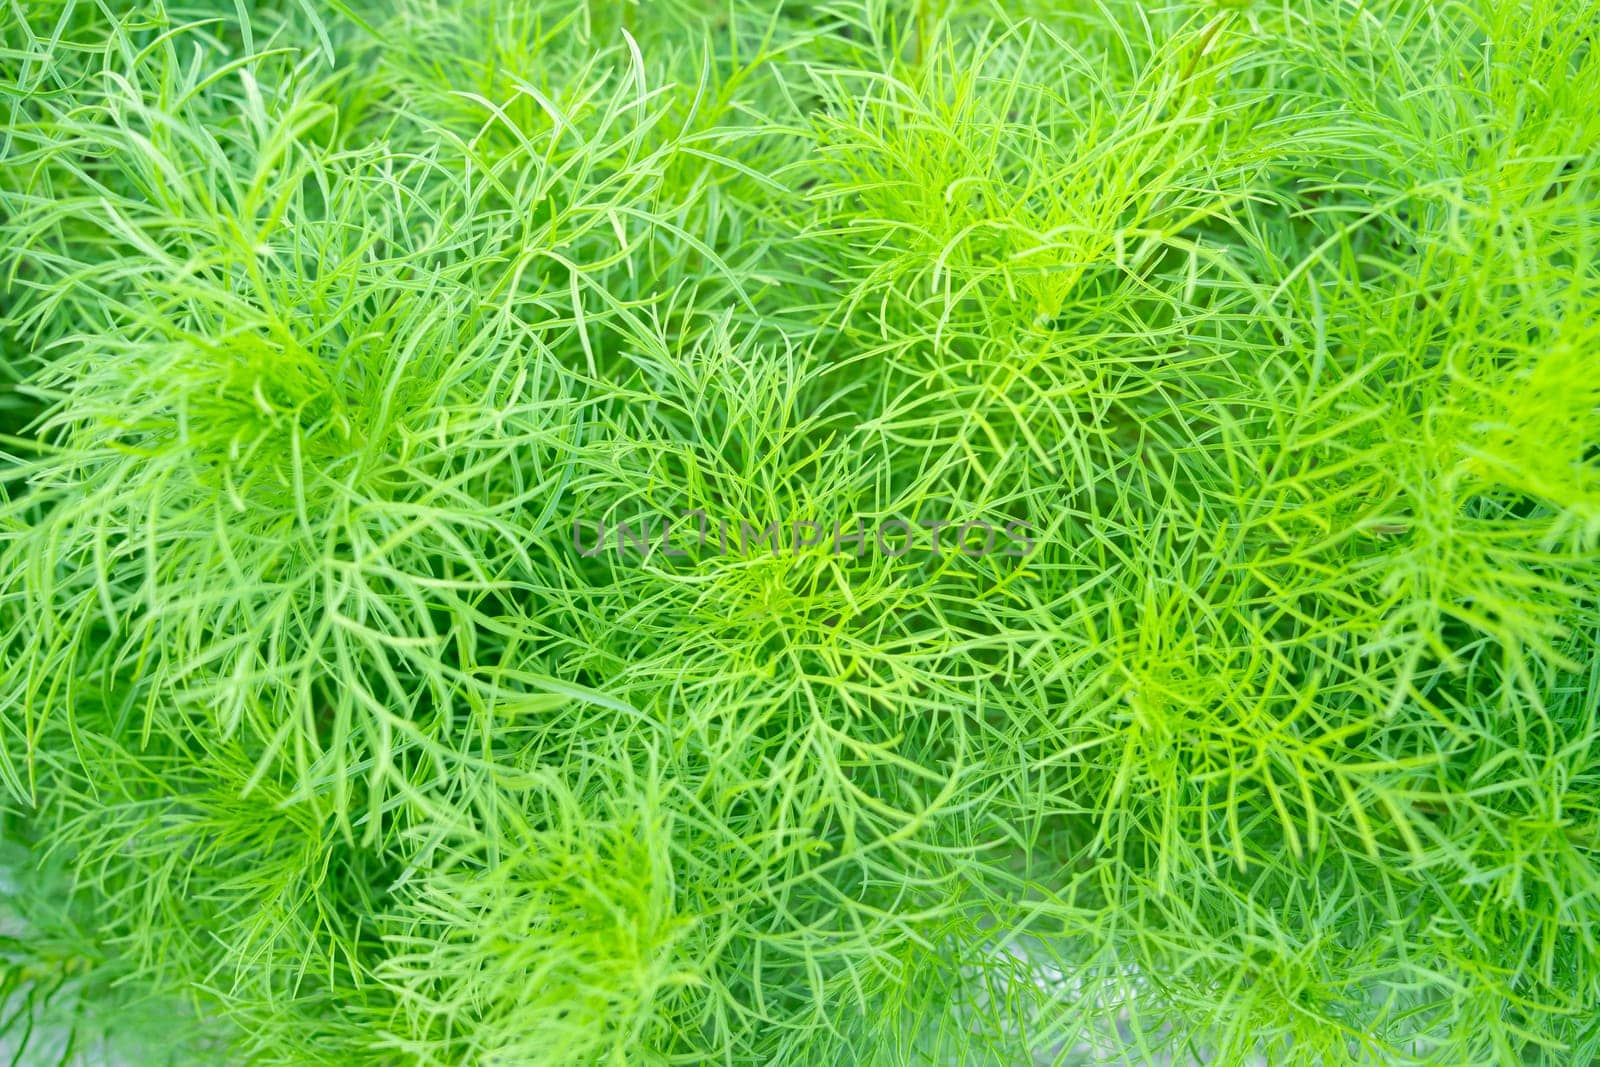 Dog fennel (Eupatorium capillifolium) in the garden